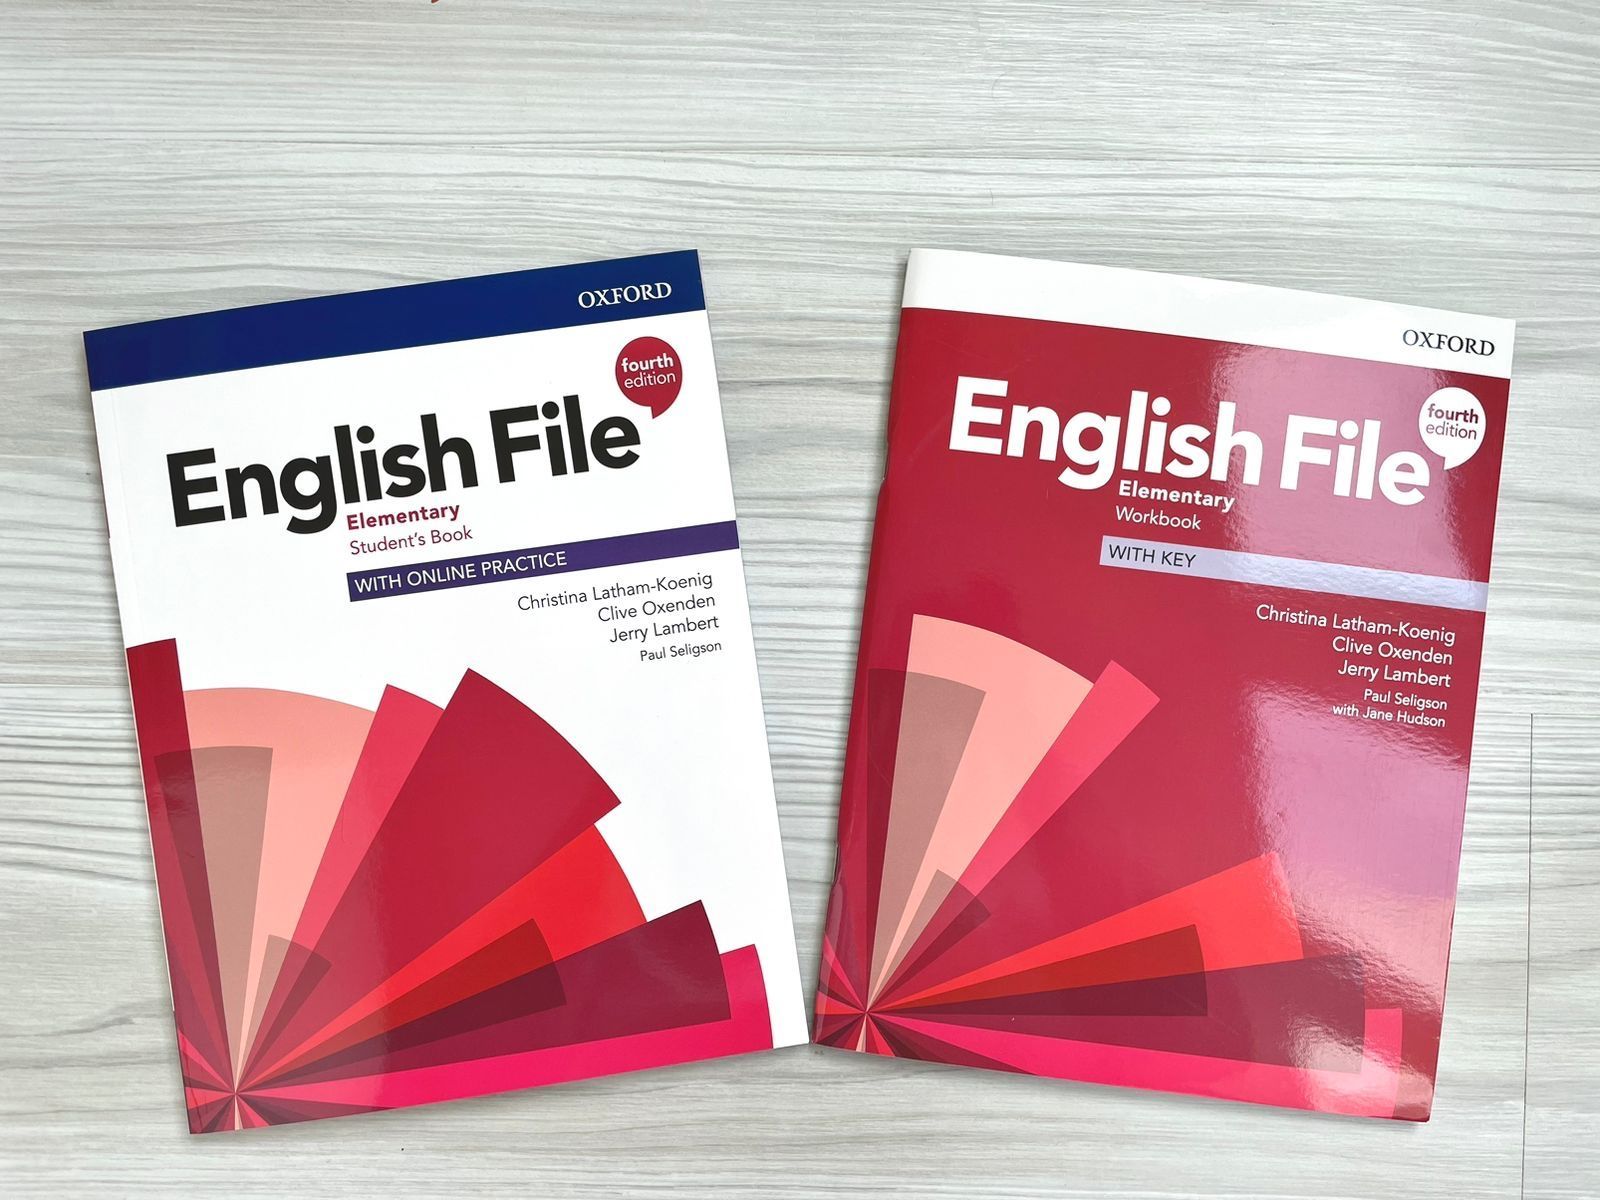 English file: Elementary. English file 4 Edition Elementary. English file Elementary Workbook fourth Edition. English file Elementary 4th Edition. English file elementary 4